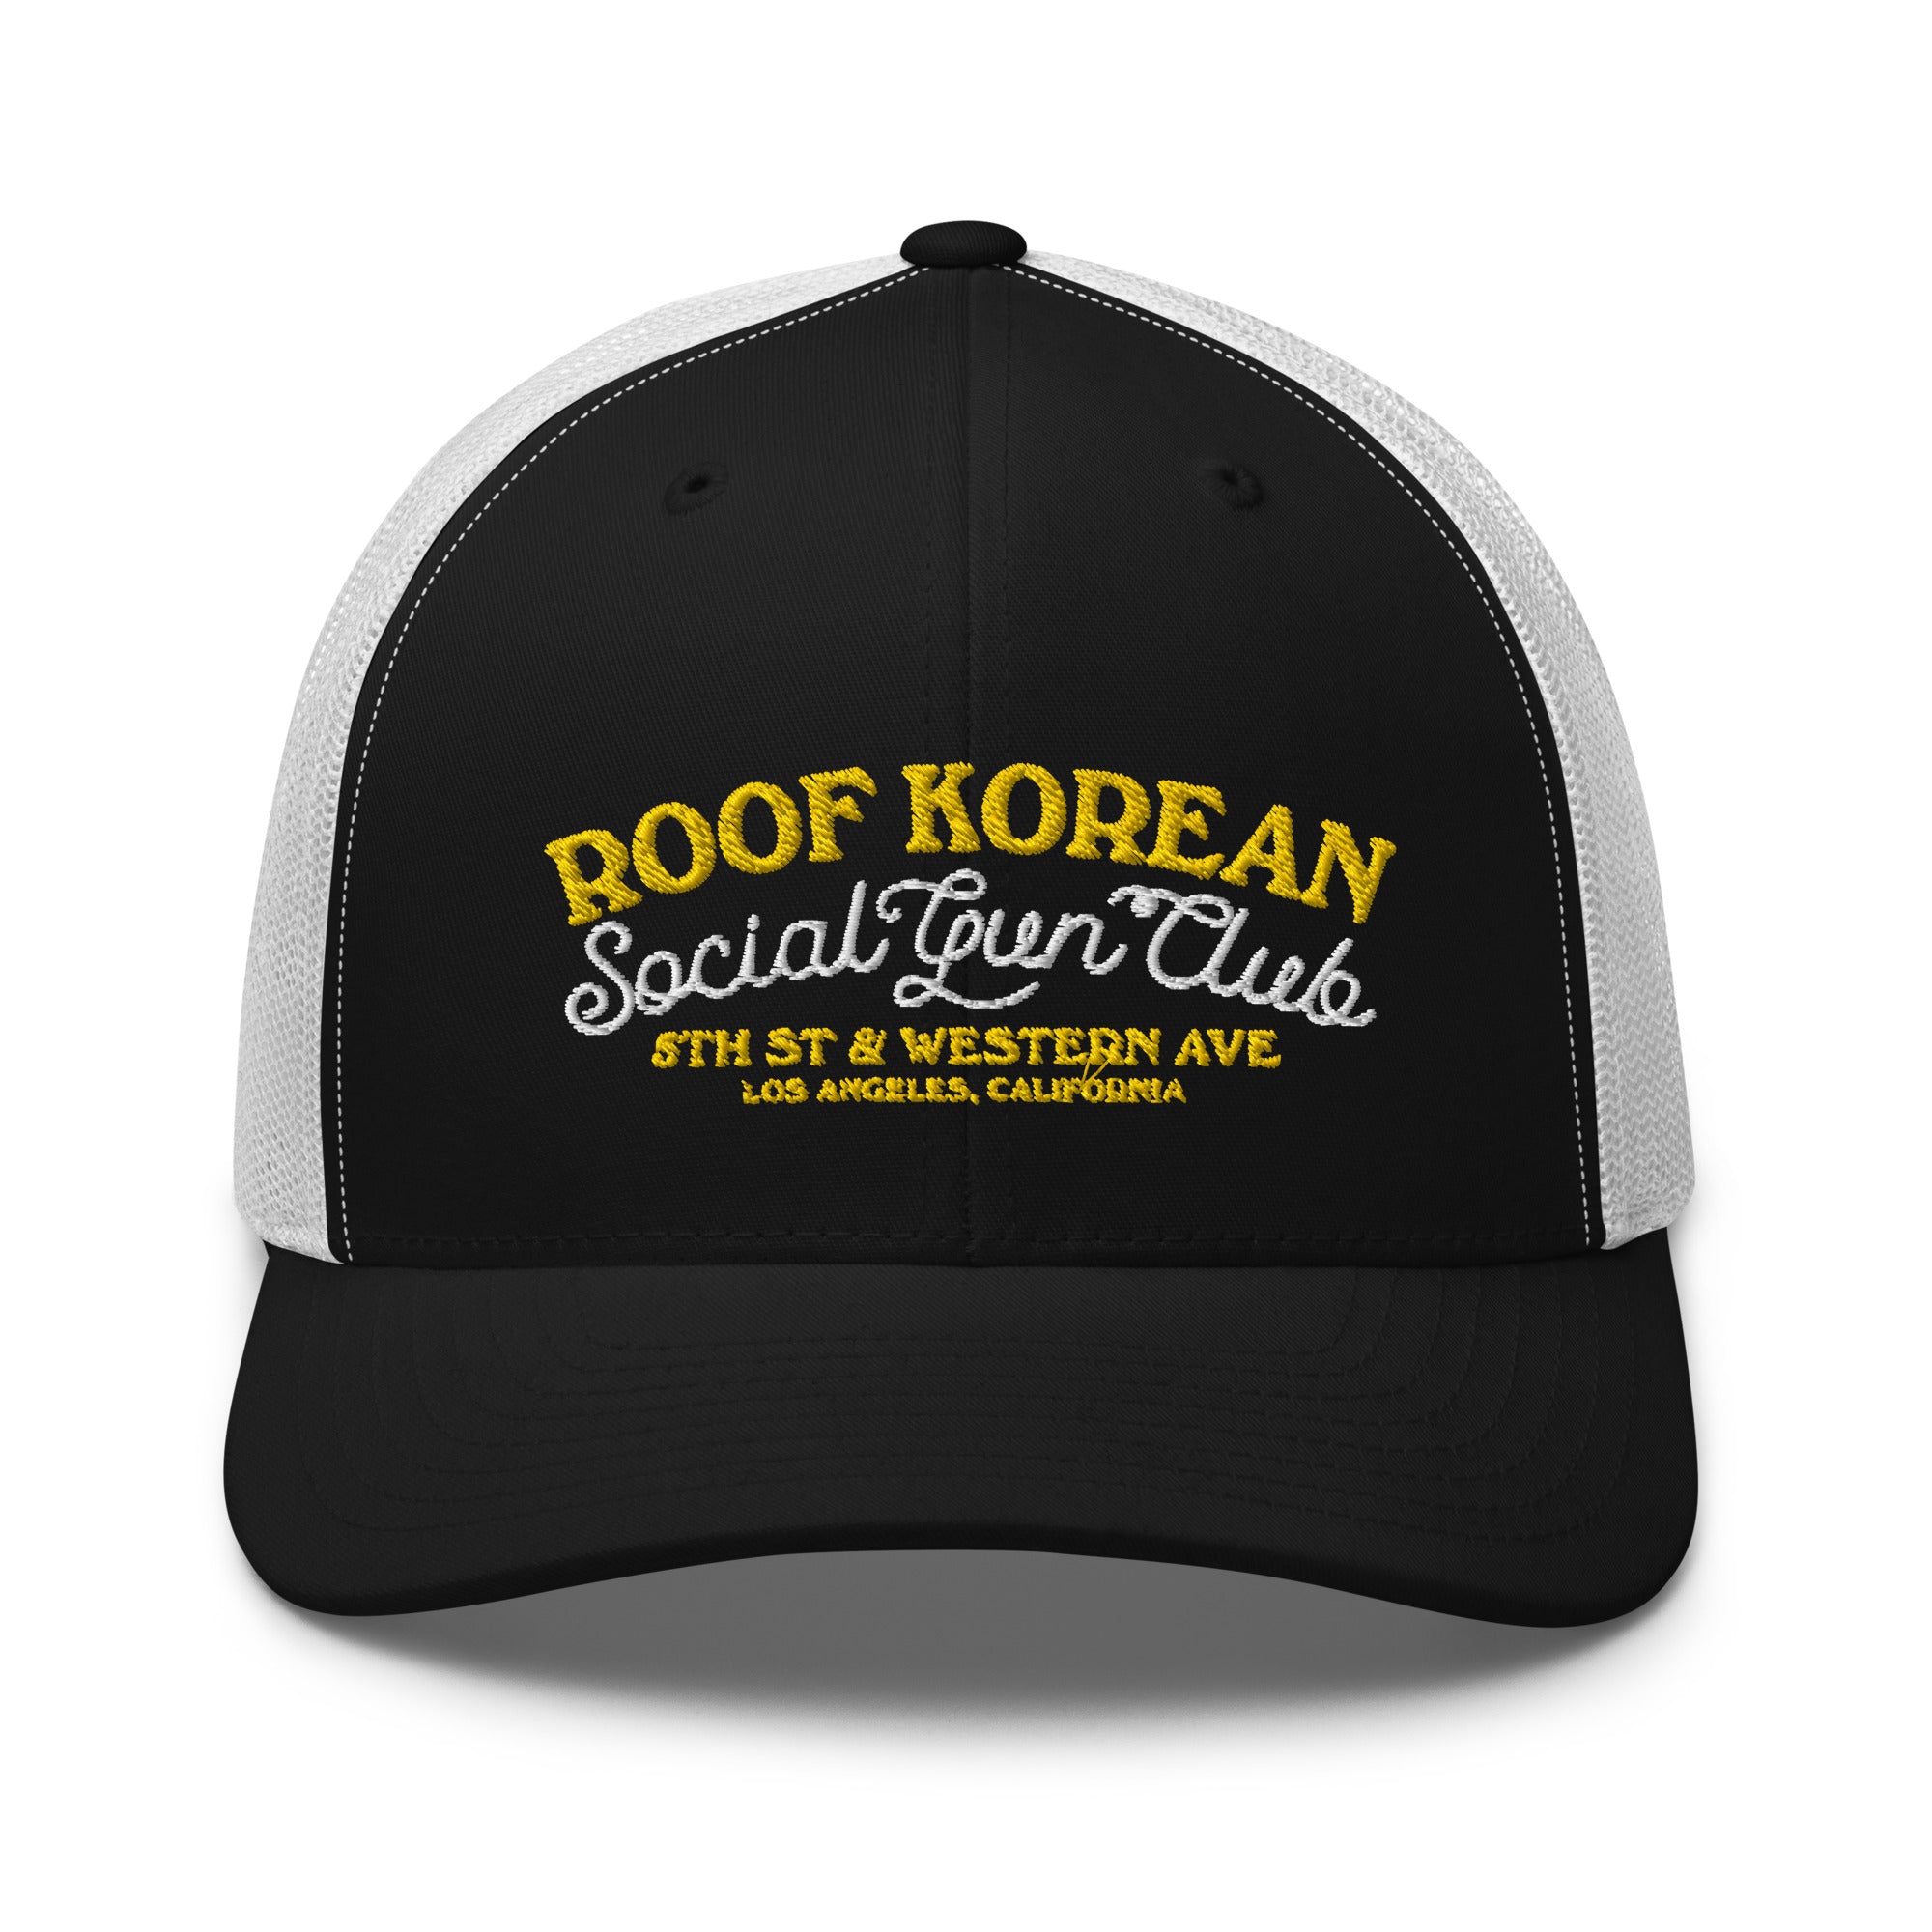 Roof Korean Social Gun Club Trucker Cap